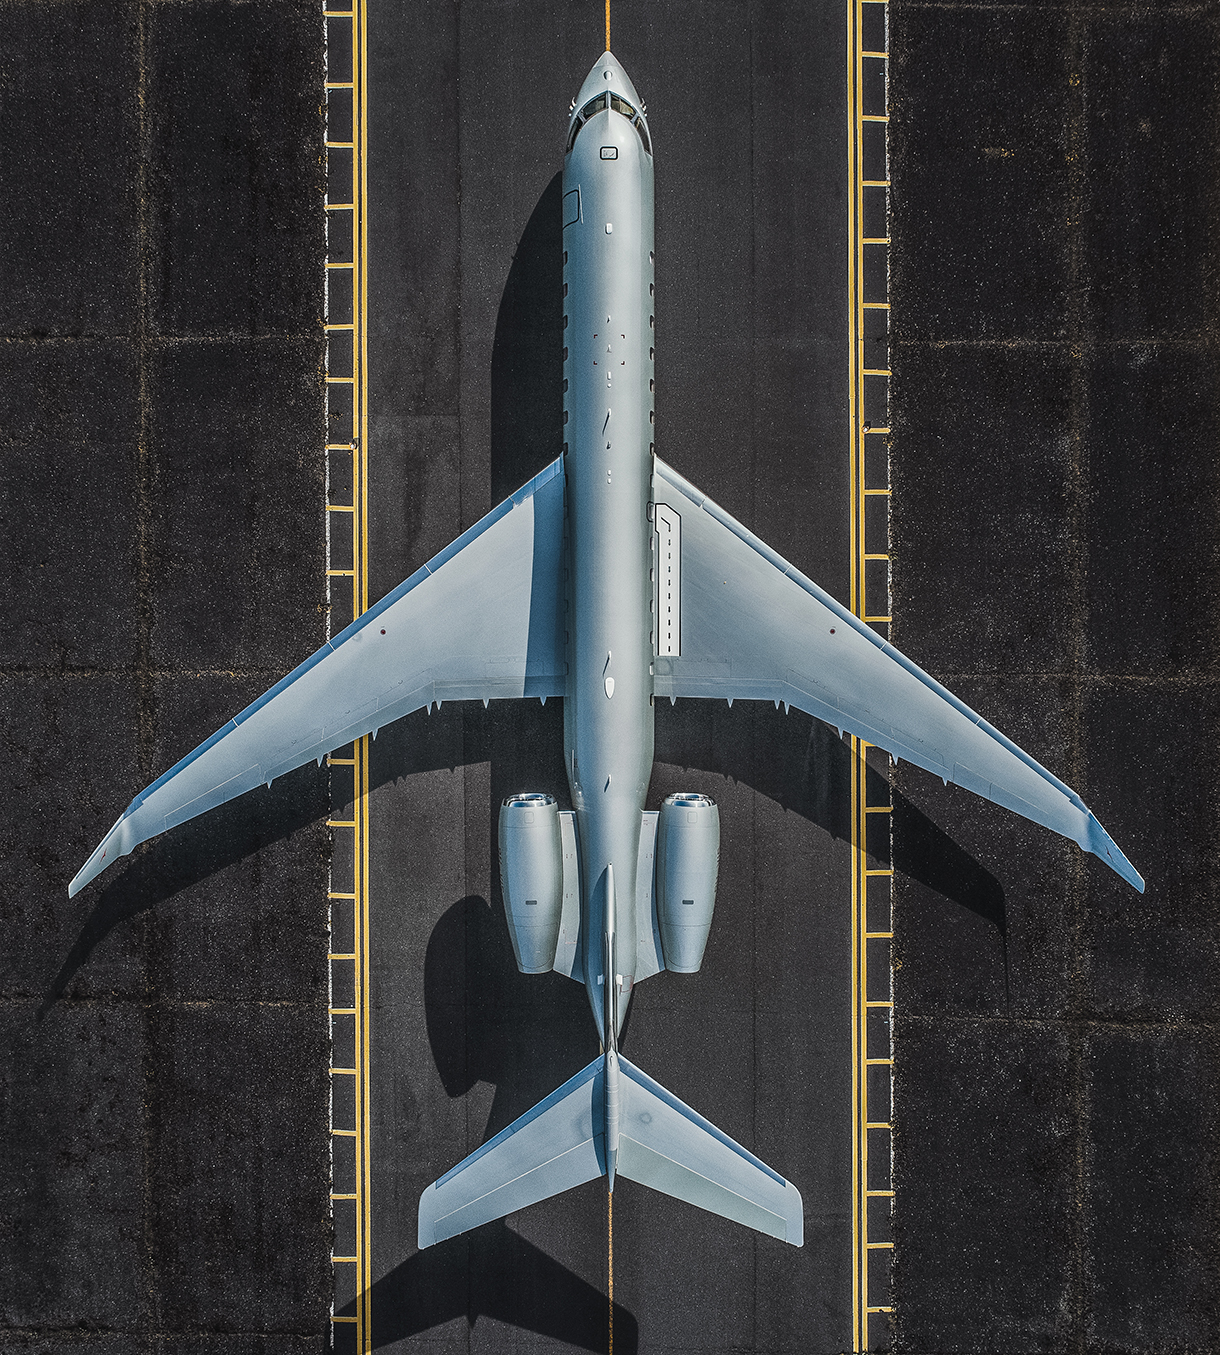 Birdseye view of Bombardier Global 7500 jet on tarmac